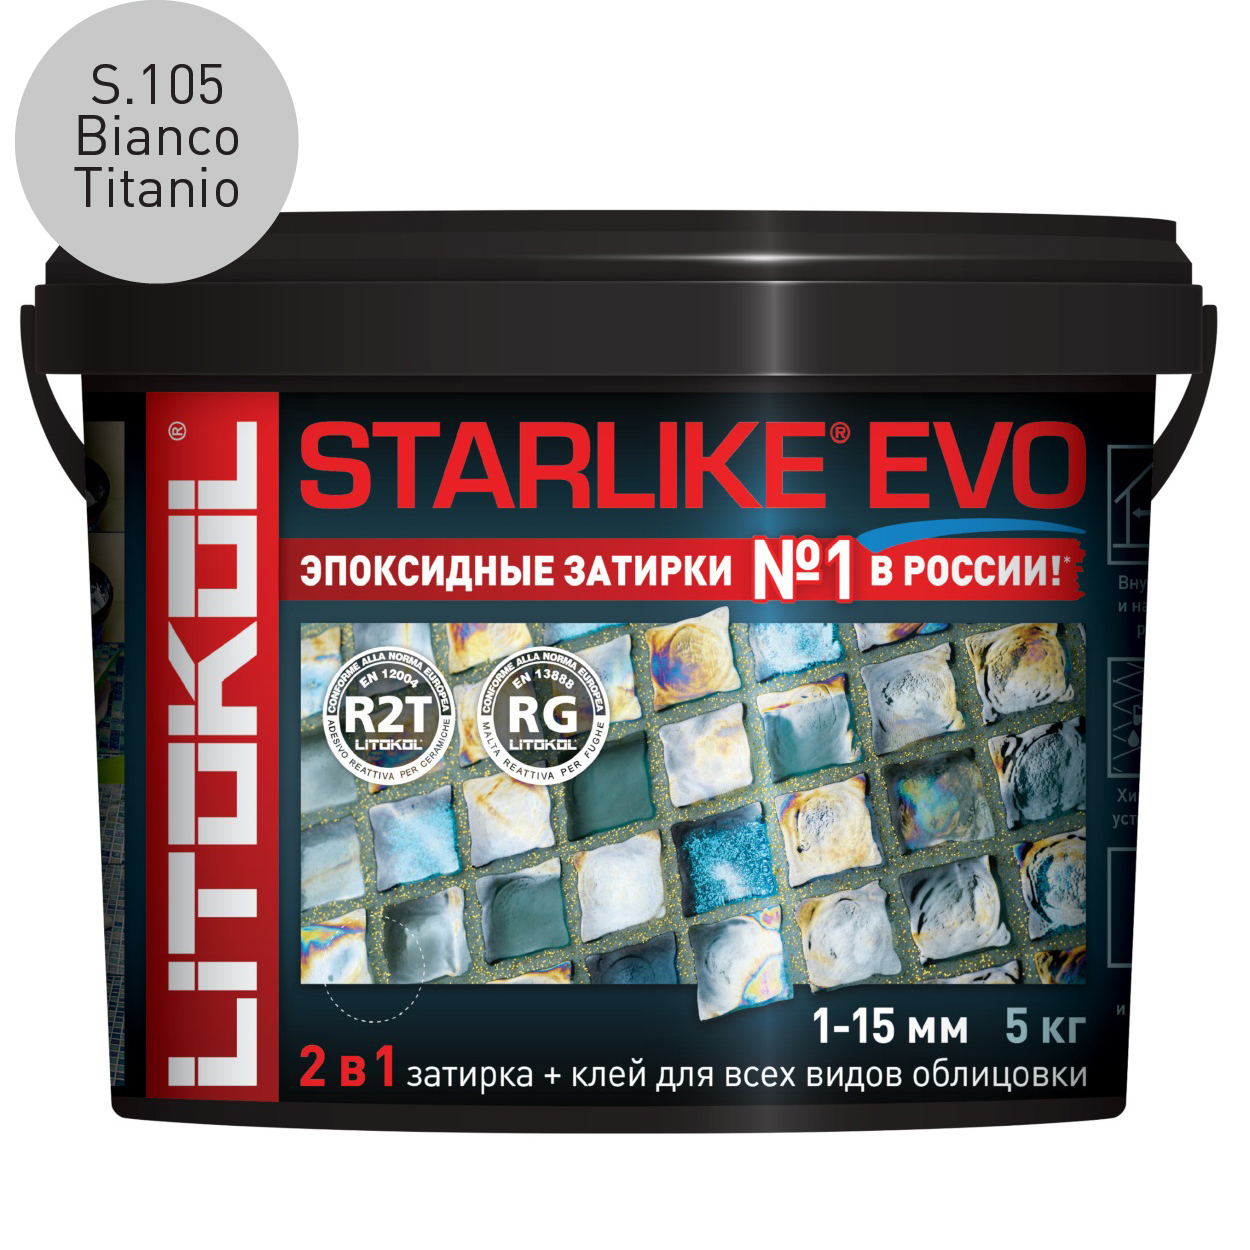 Затирка эпоксидная Litokol Starlike Evo S.105 Bianco Titanio (5 кг.)